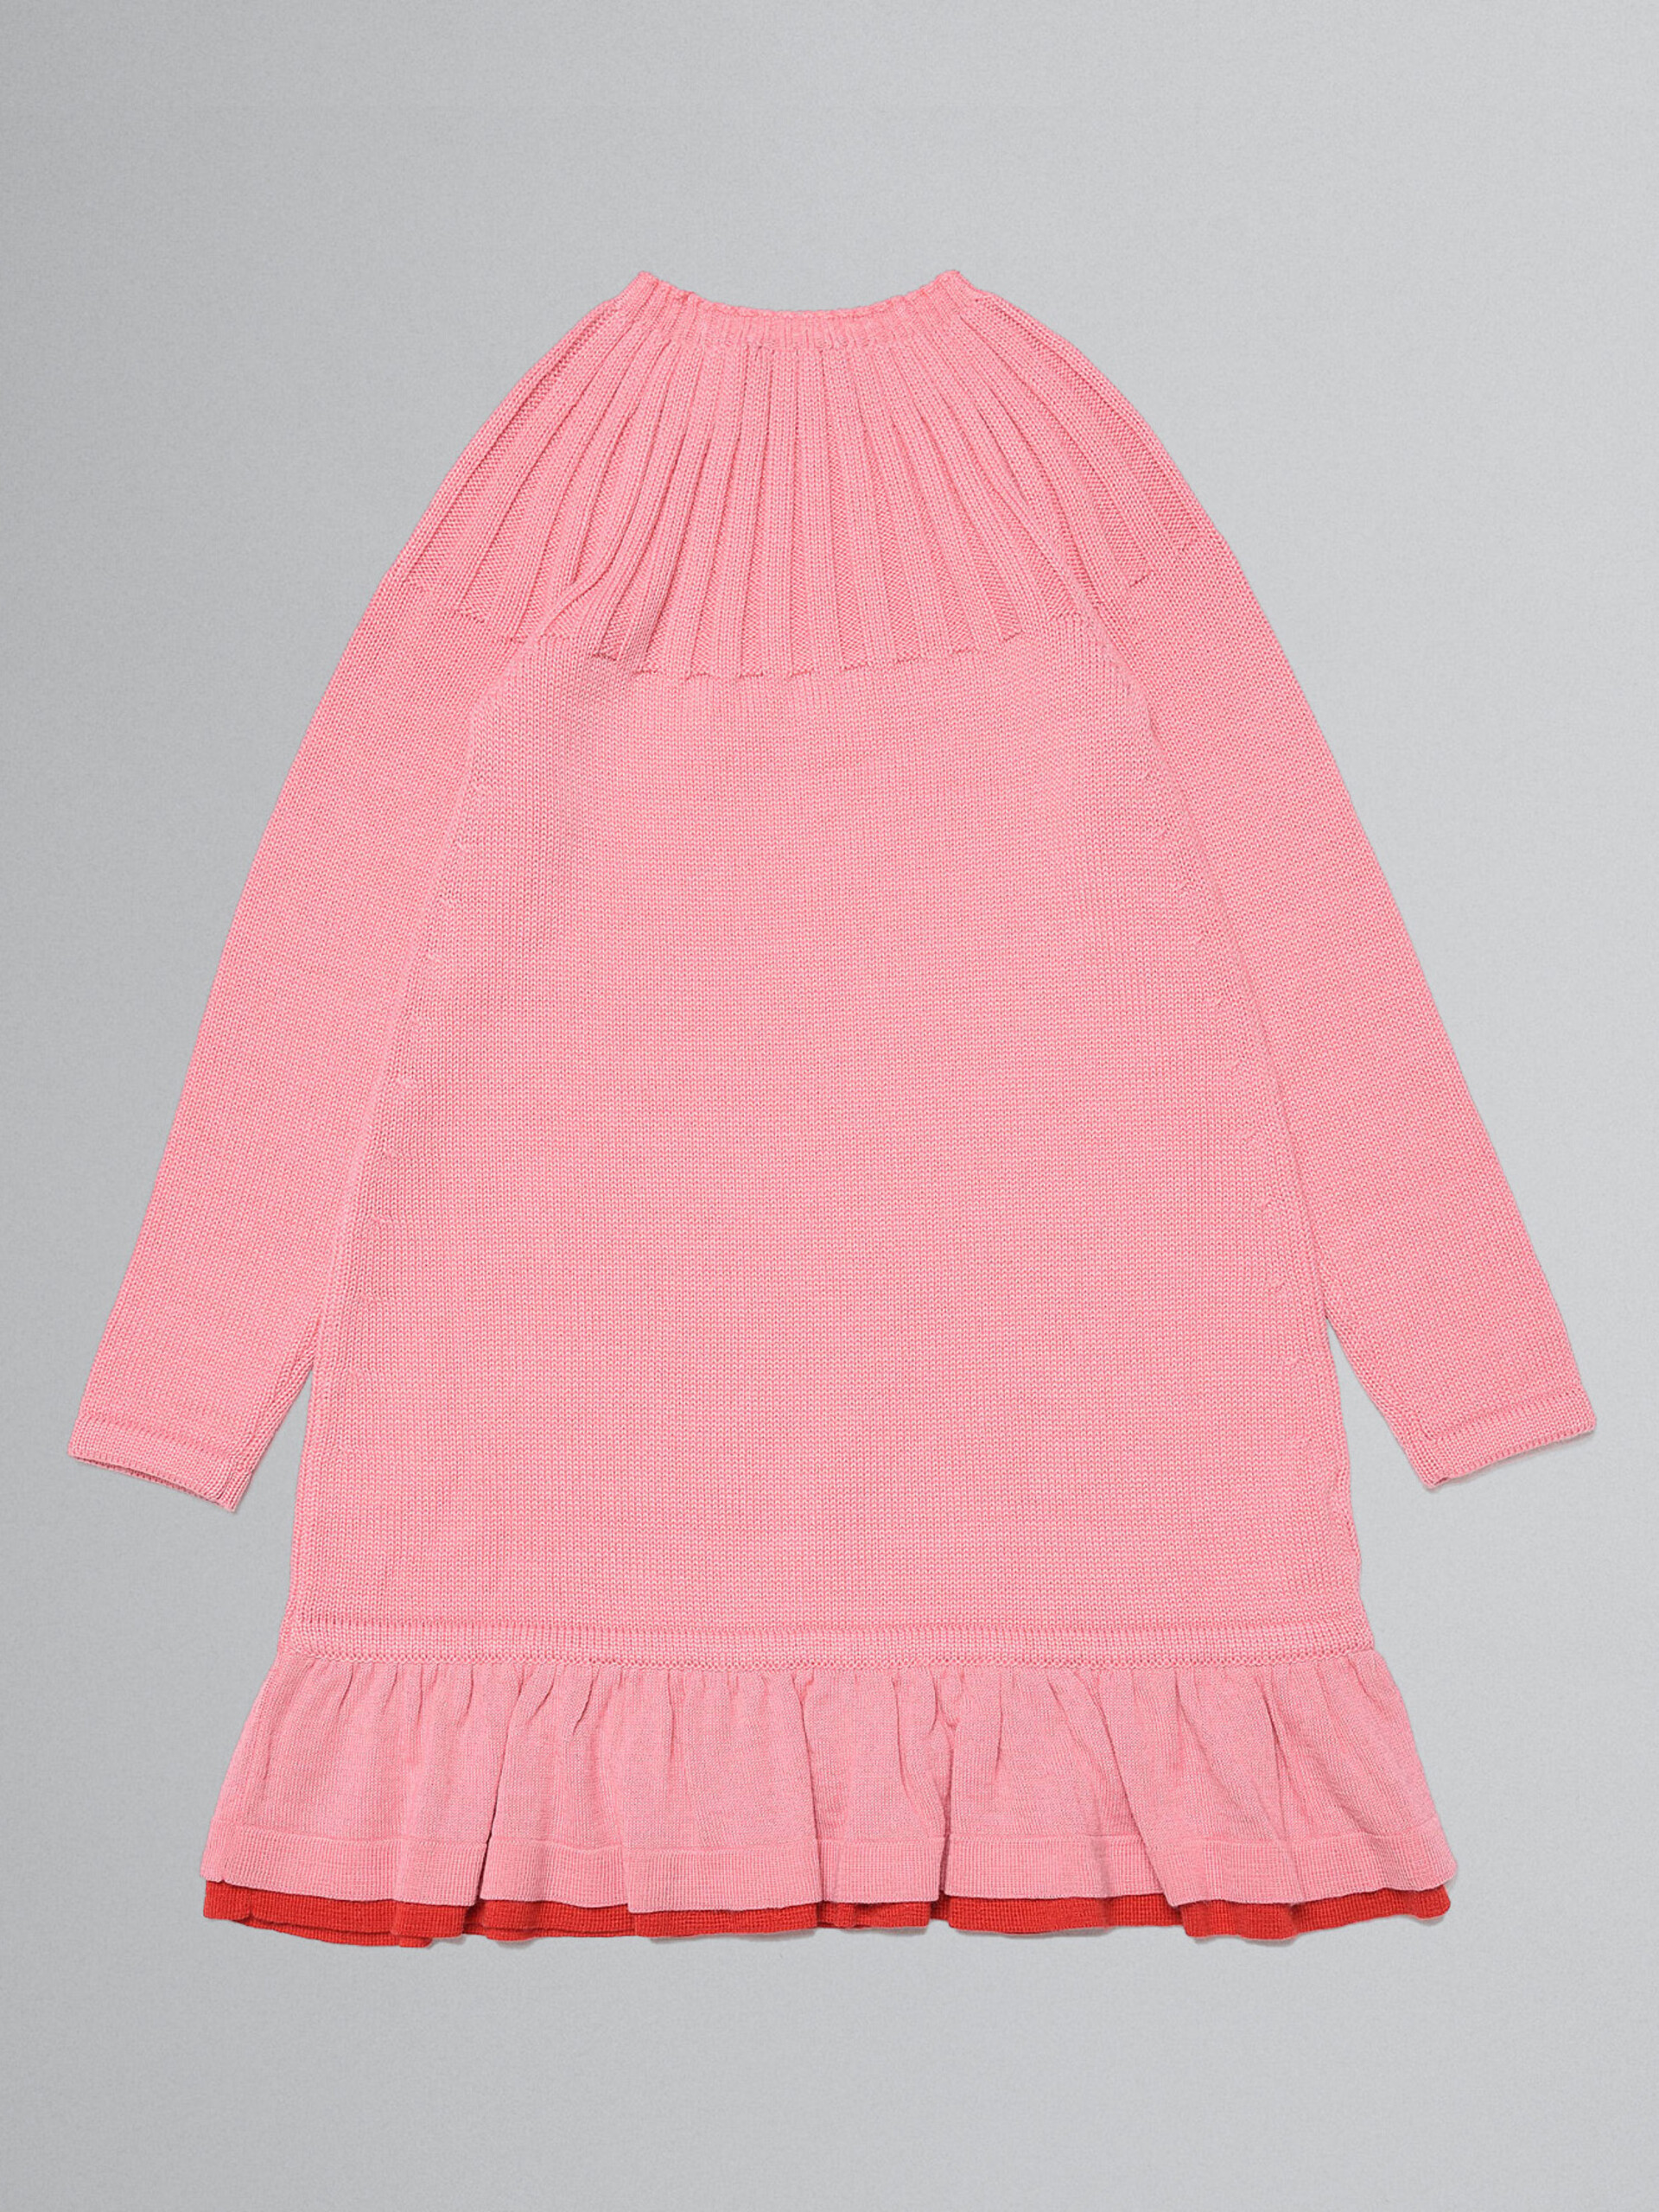 Pink jumper dress with flounce hem - Dresses - Image 2